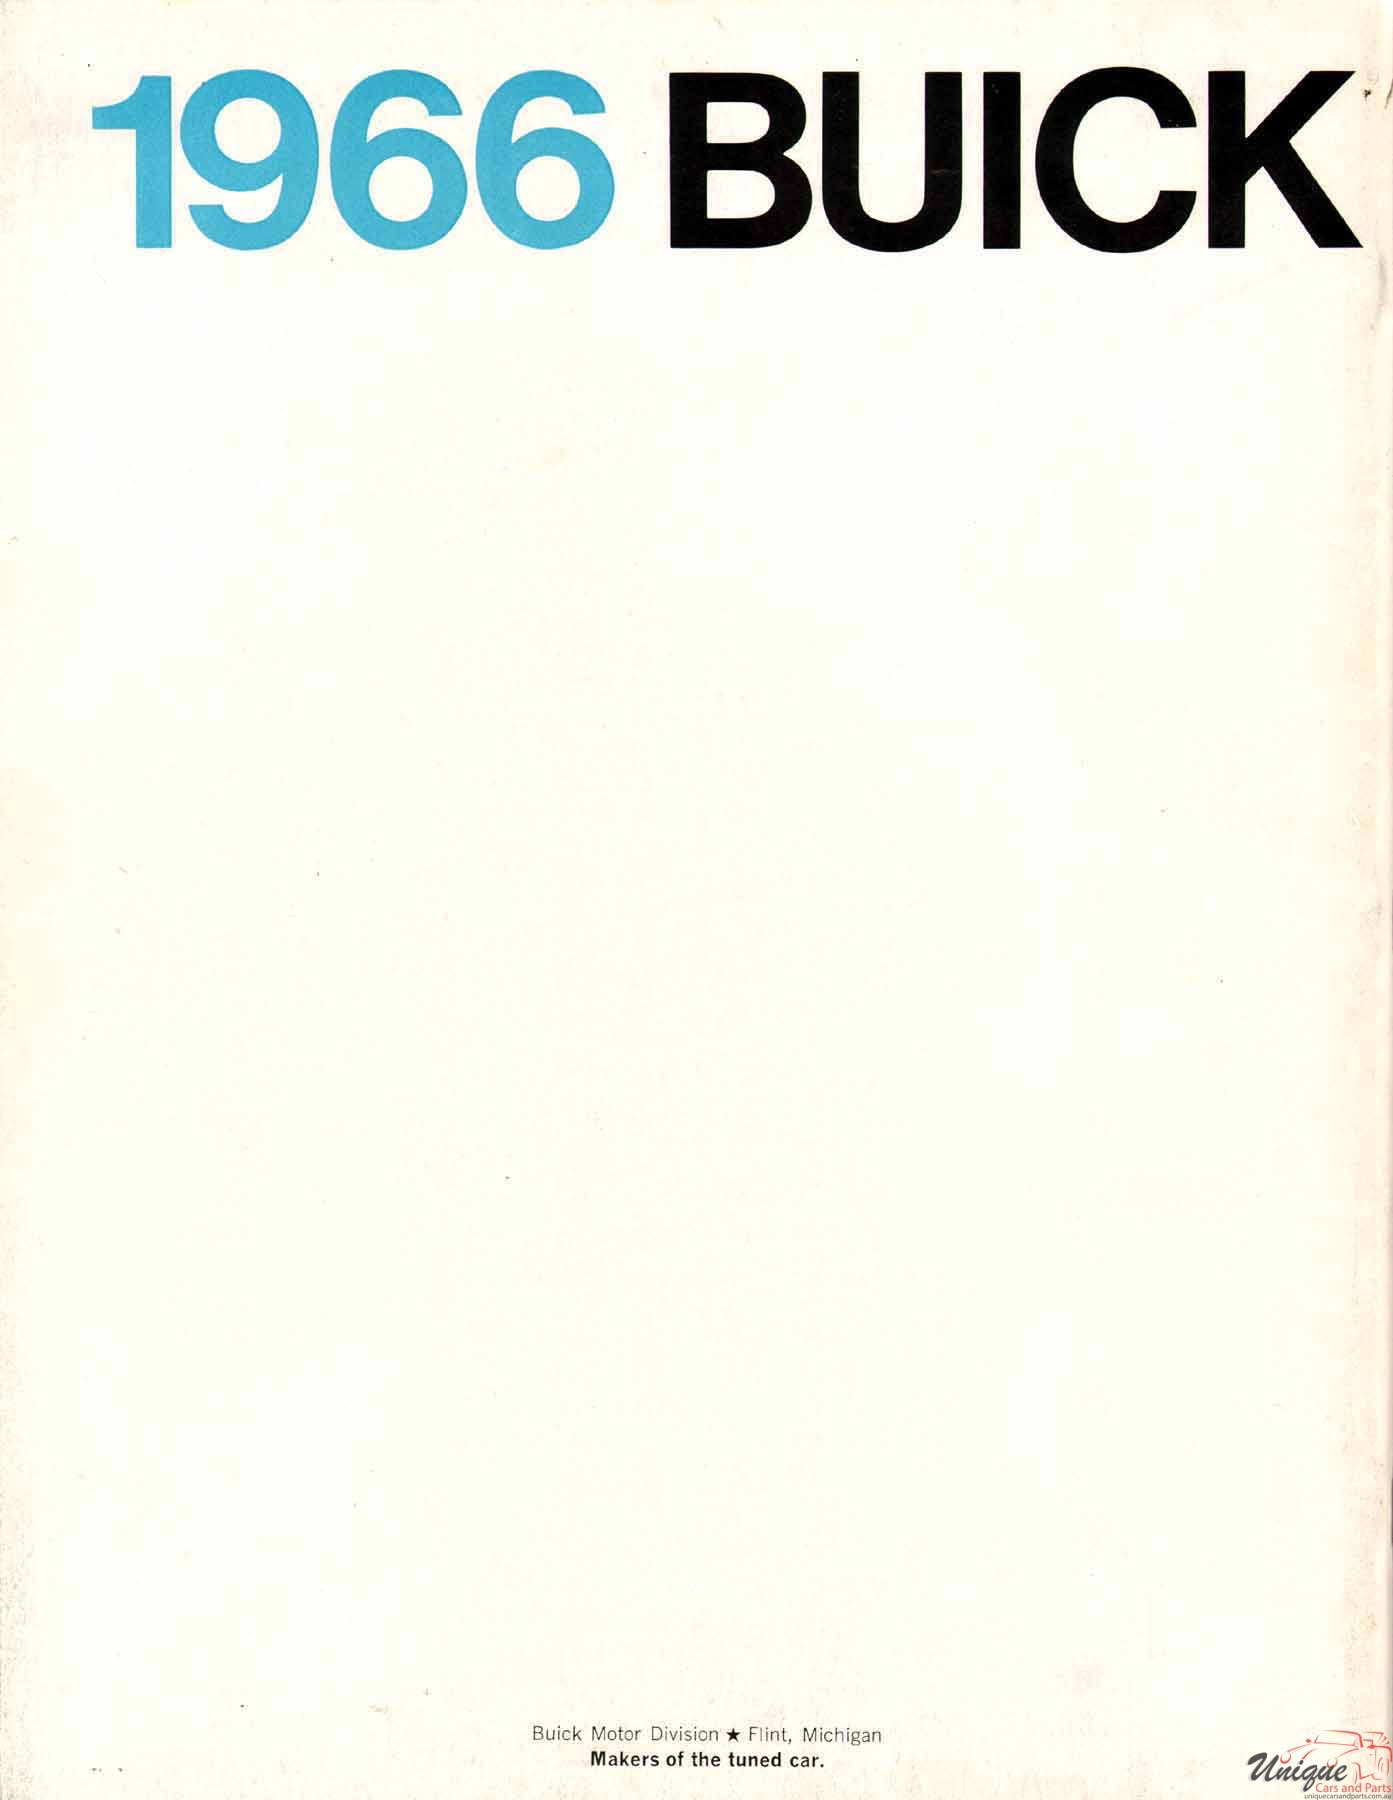 1966 Buick Prestige Brochure Page 1